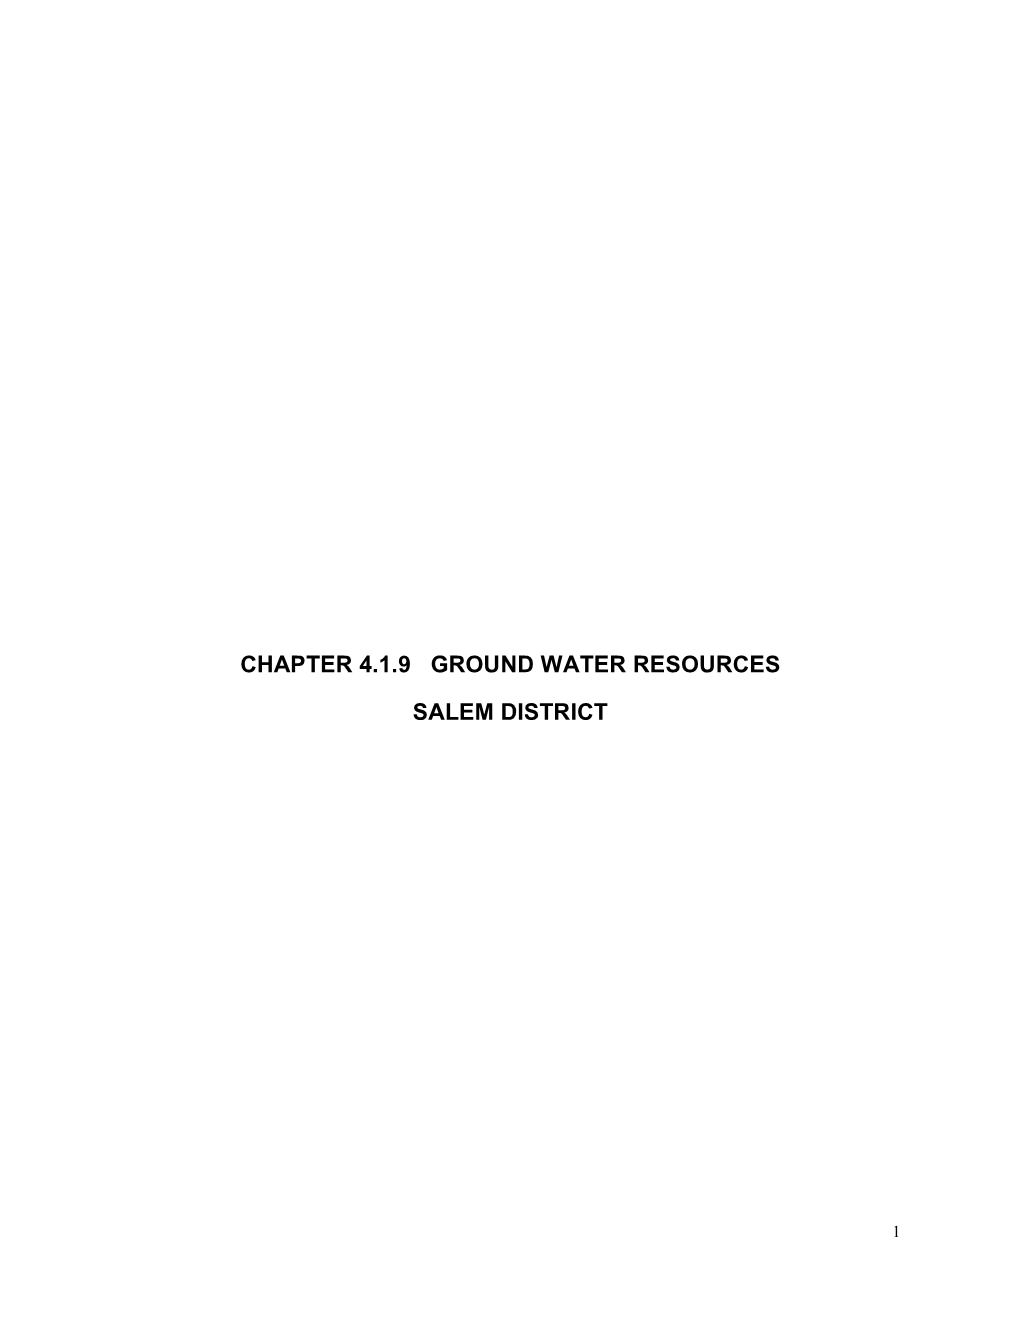 Chapter 4.1.9 Ground Water Resources Salem District